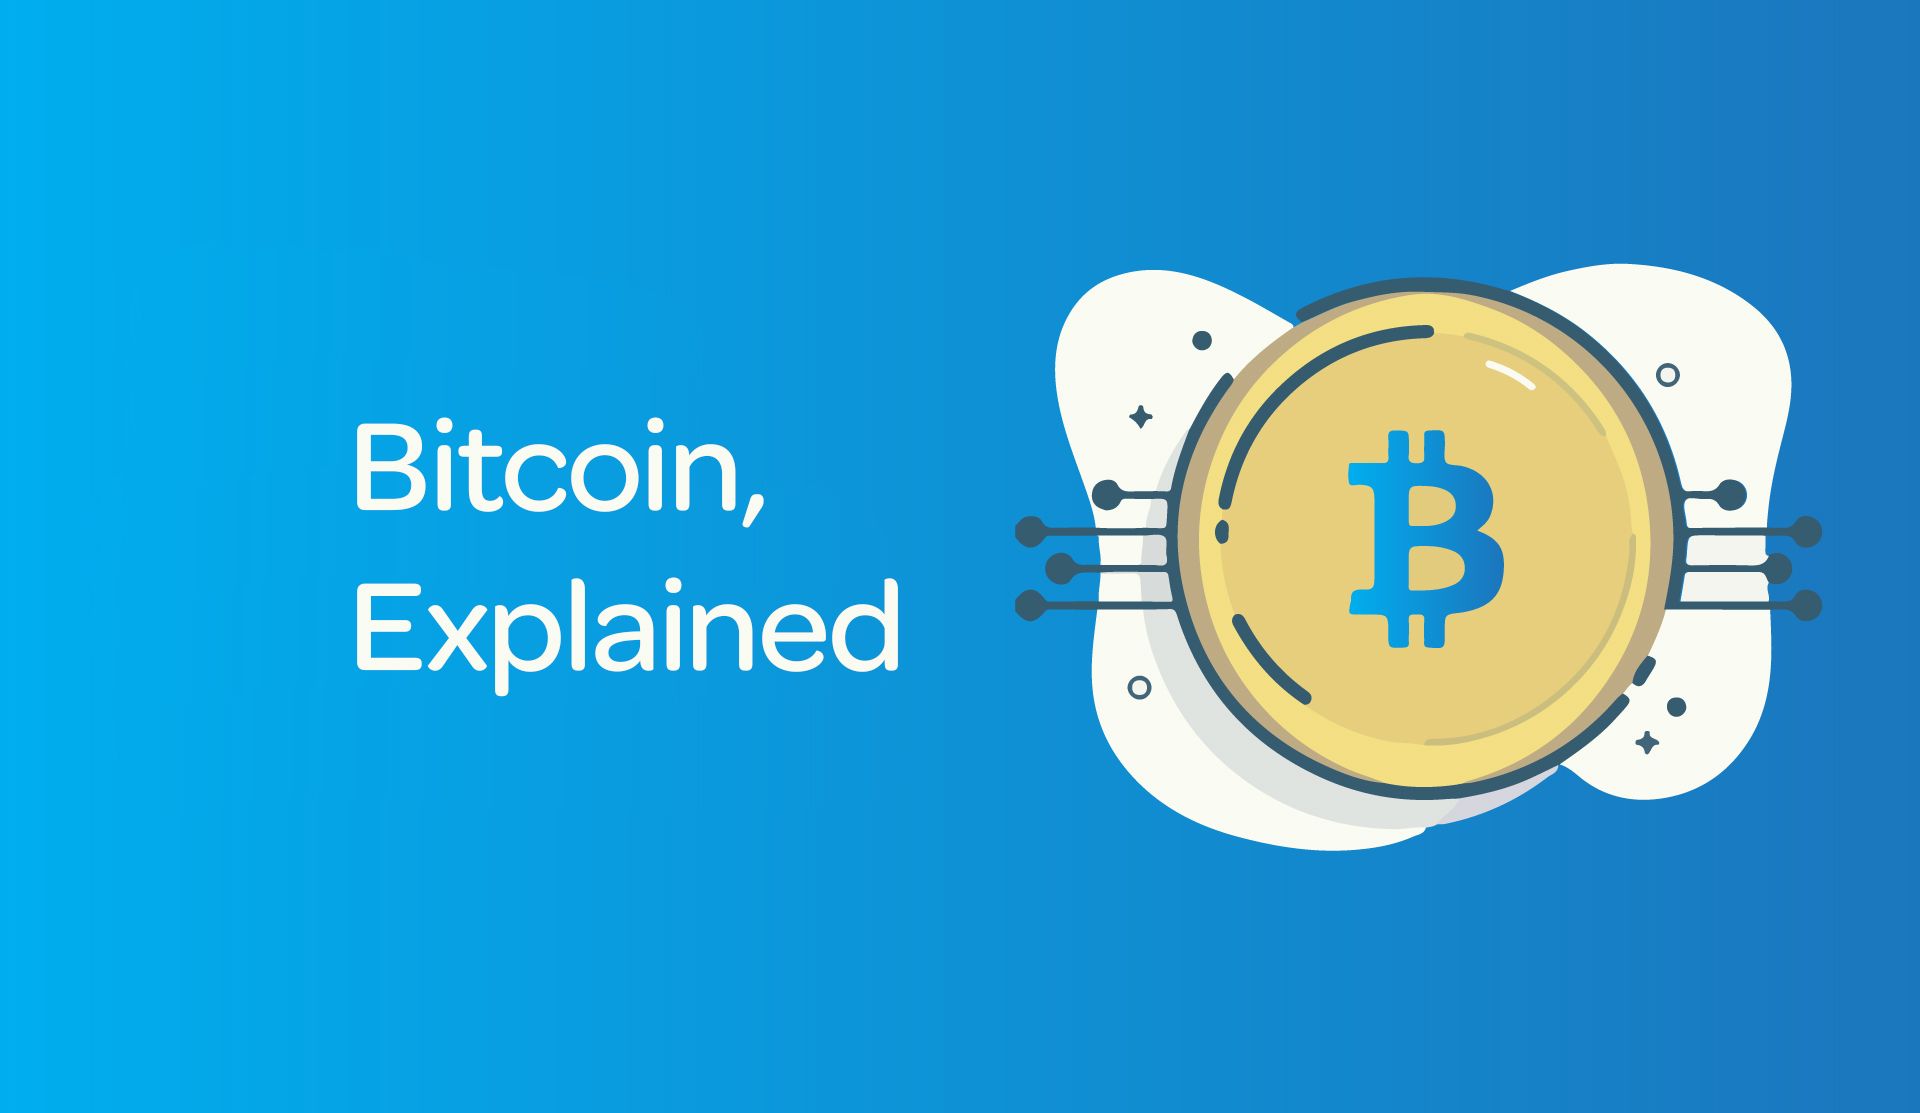 Bitcoin, Explained